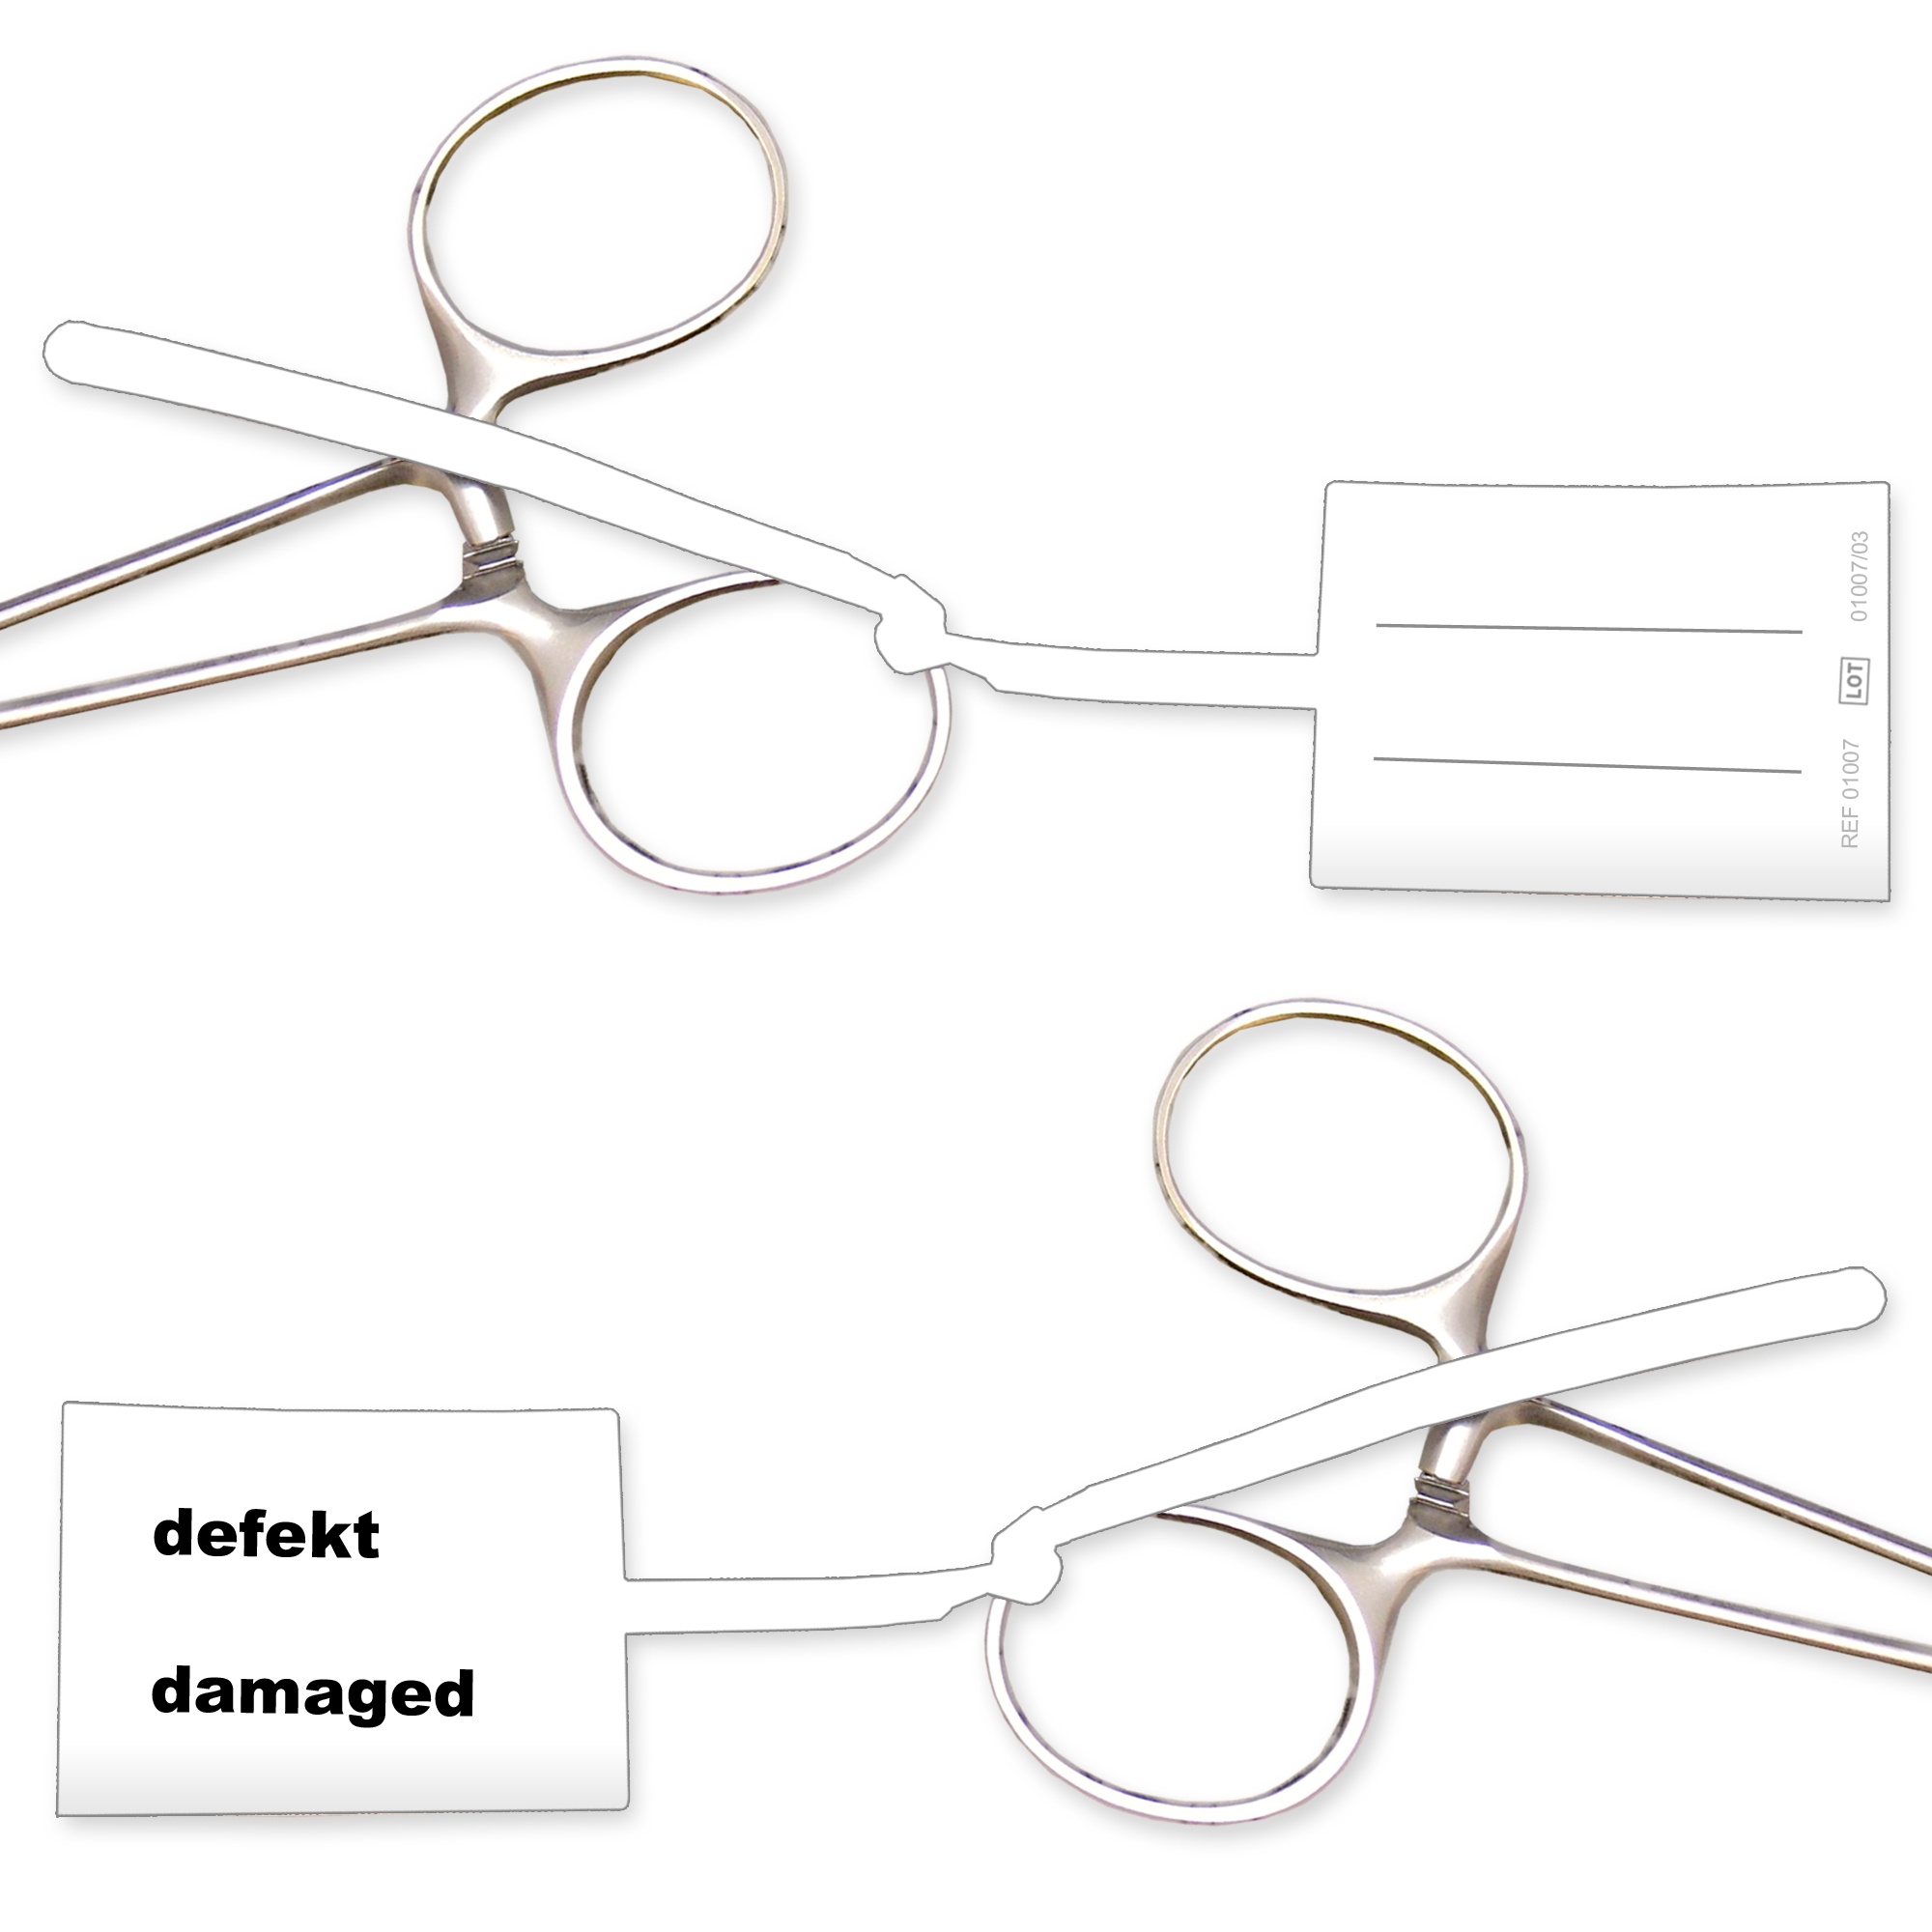 Reparaturanhänger "defekt / demaged" Image